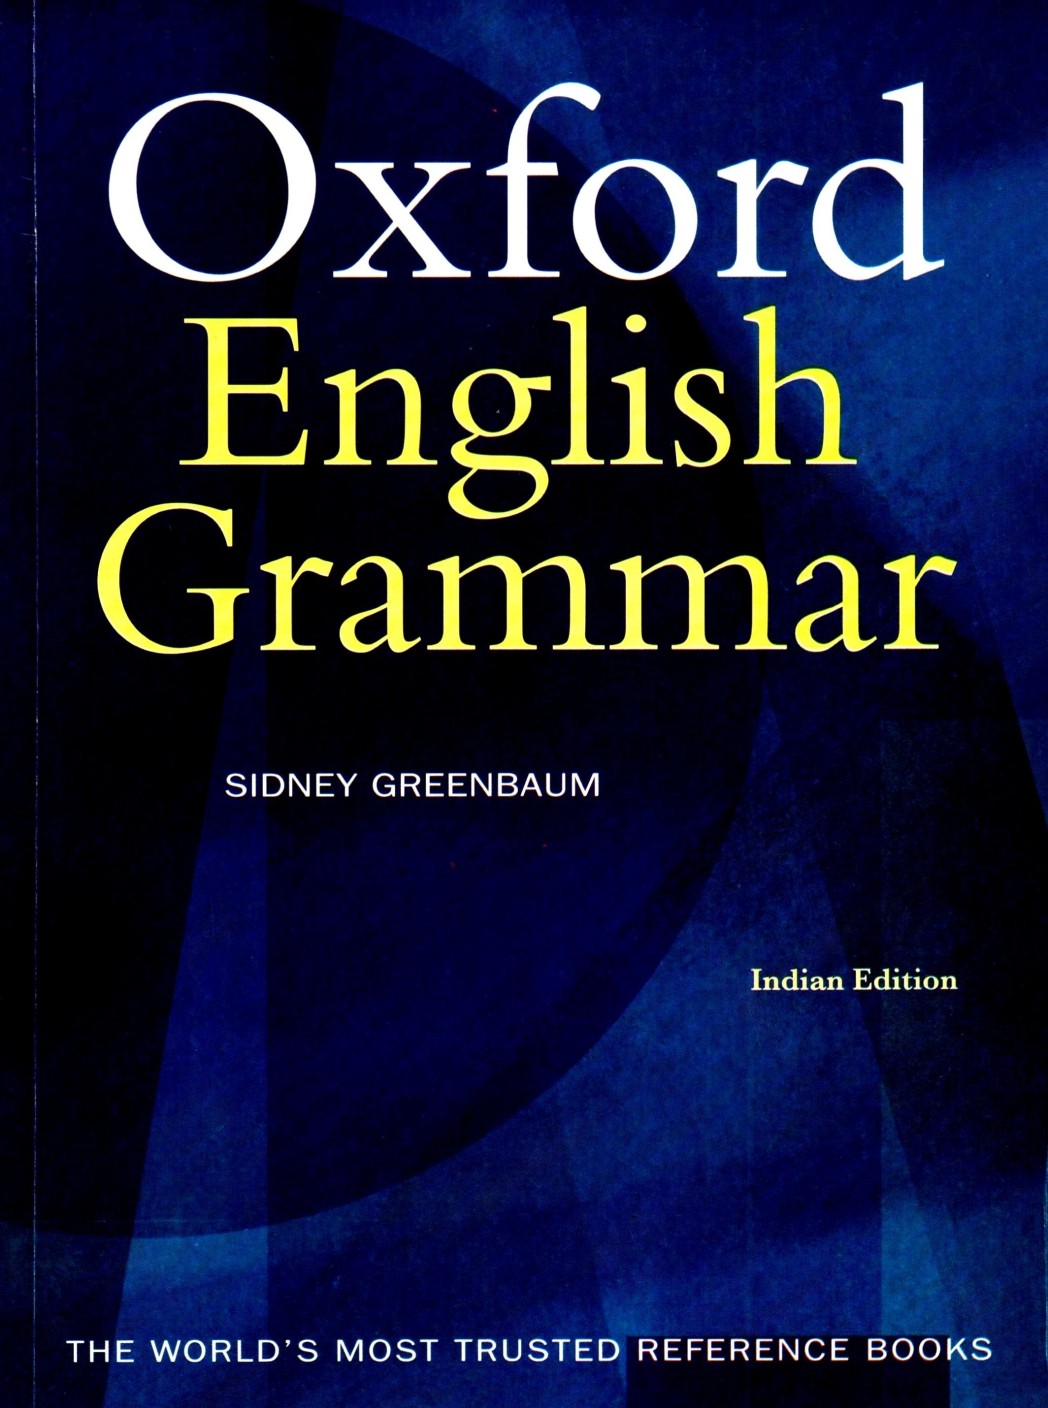 Oxford English Grammar Pdf Free - promoclever